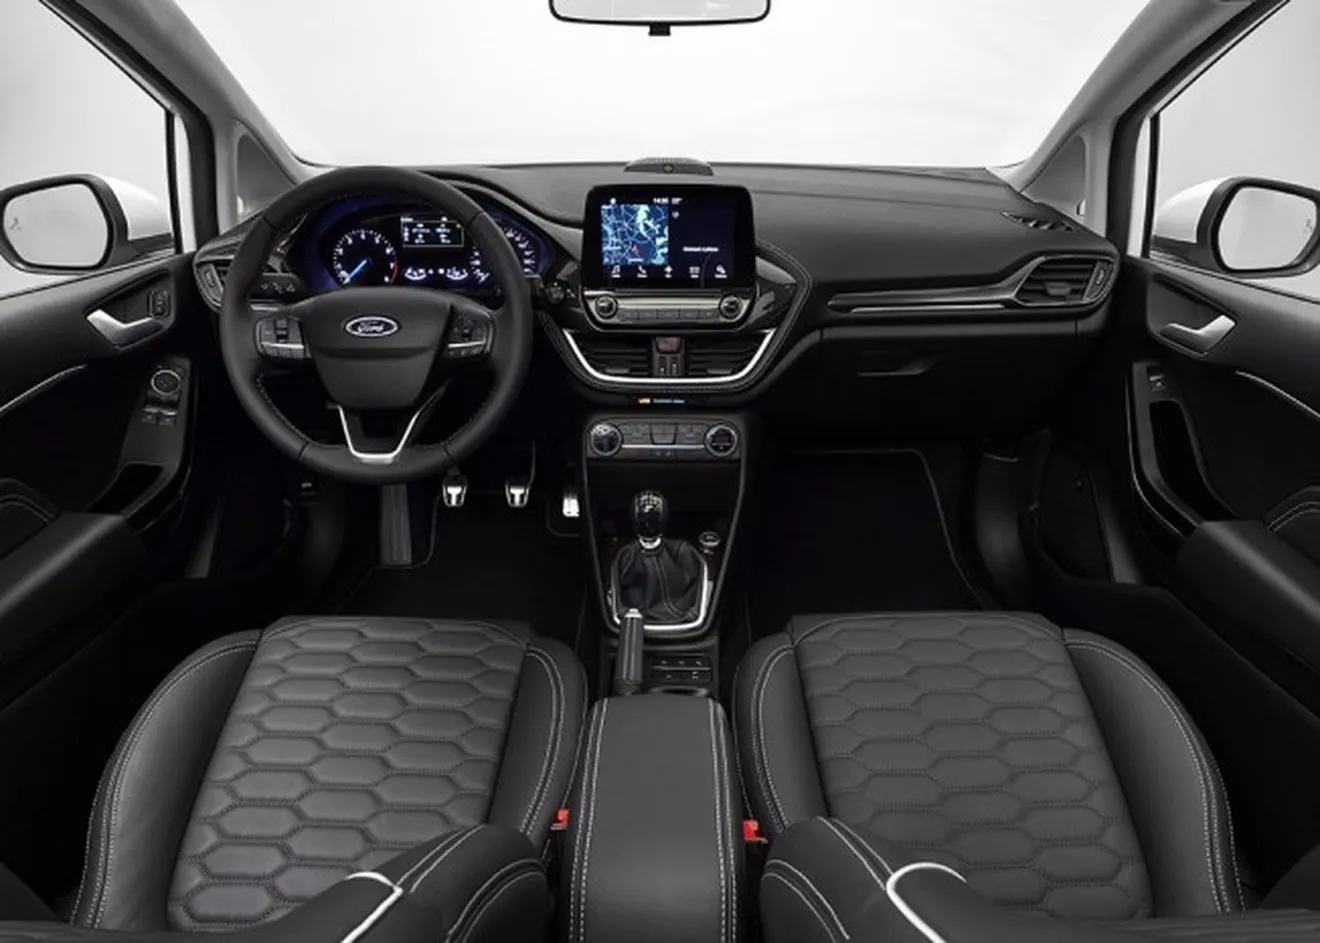 Ford Fiesta 2017 - interior